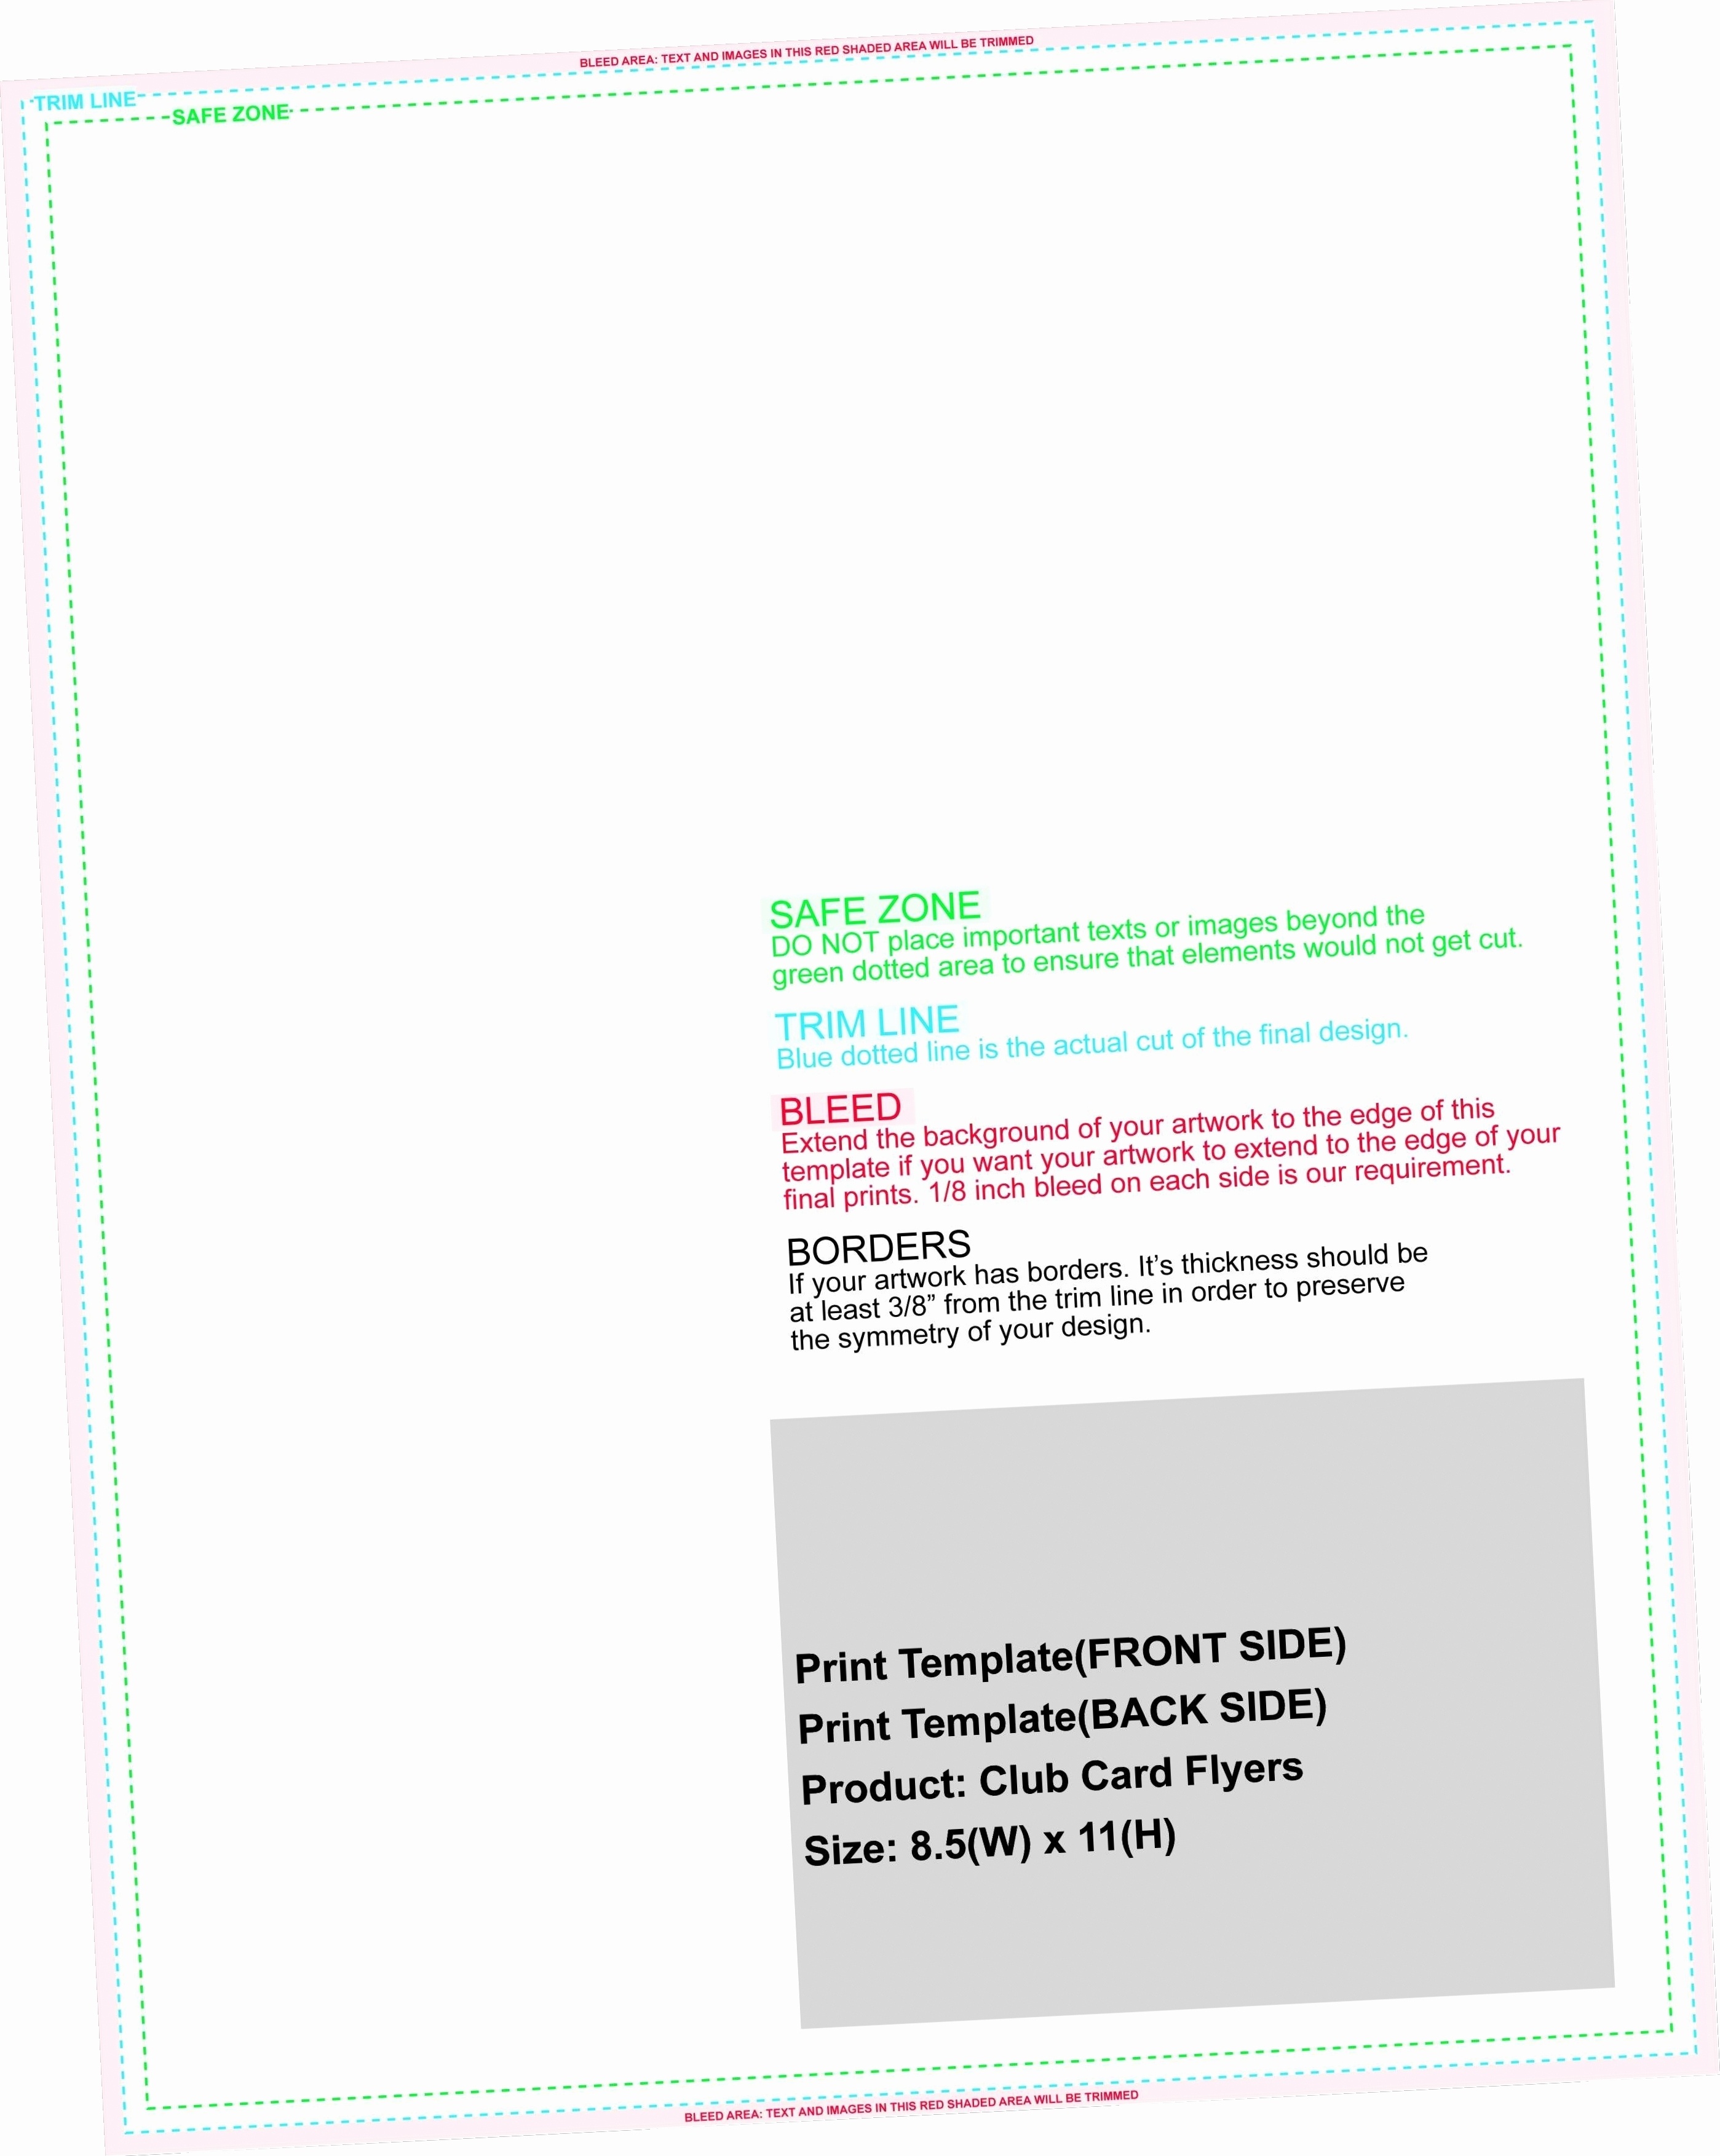 Make Your Own Business Cards Free Printable Lovely Make Your Own - Make Your Own Business Cards Free Printable